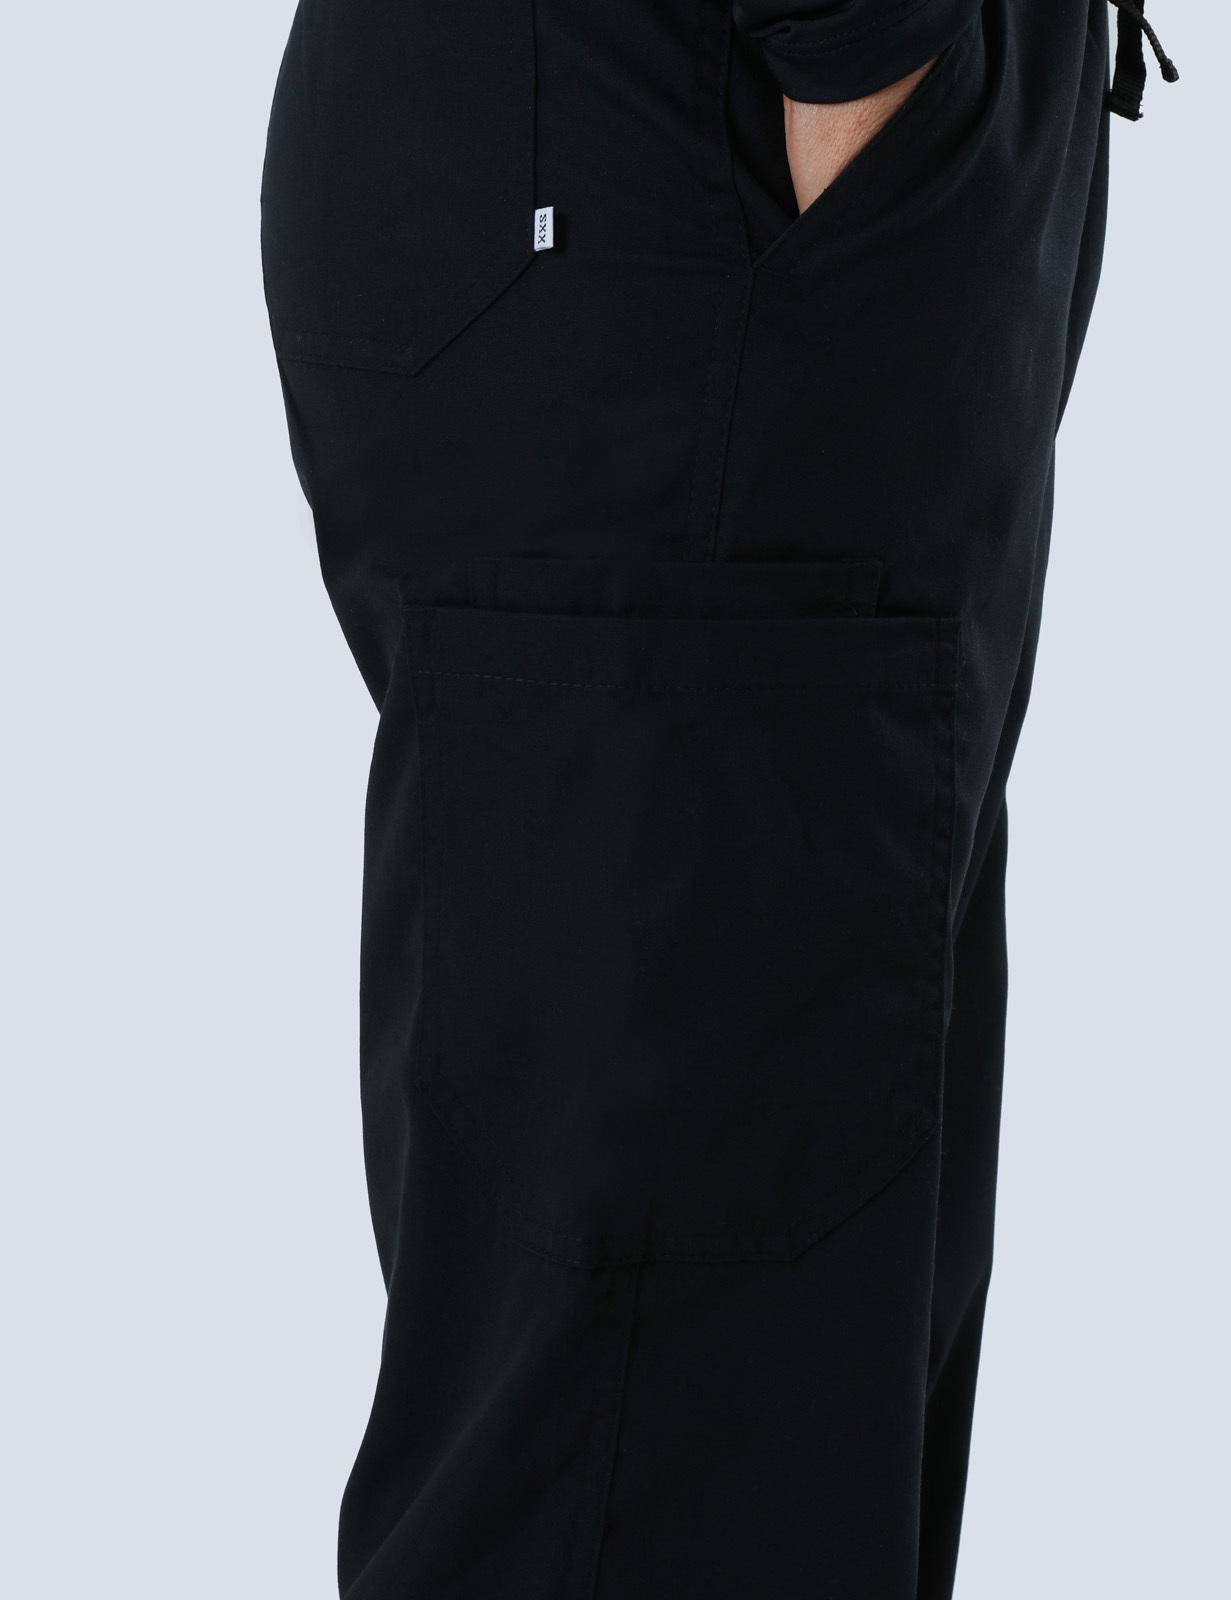 Women's Cargo Performance Pants - Black - 3X Large - 2